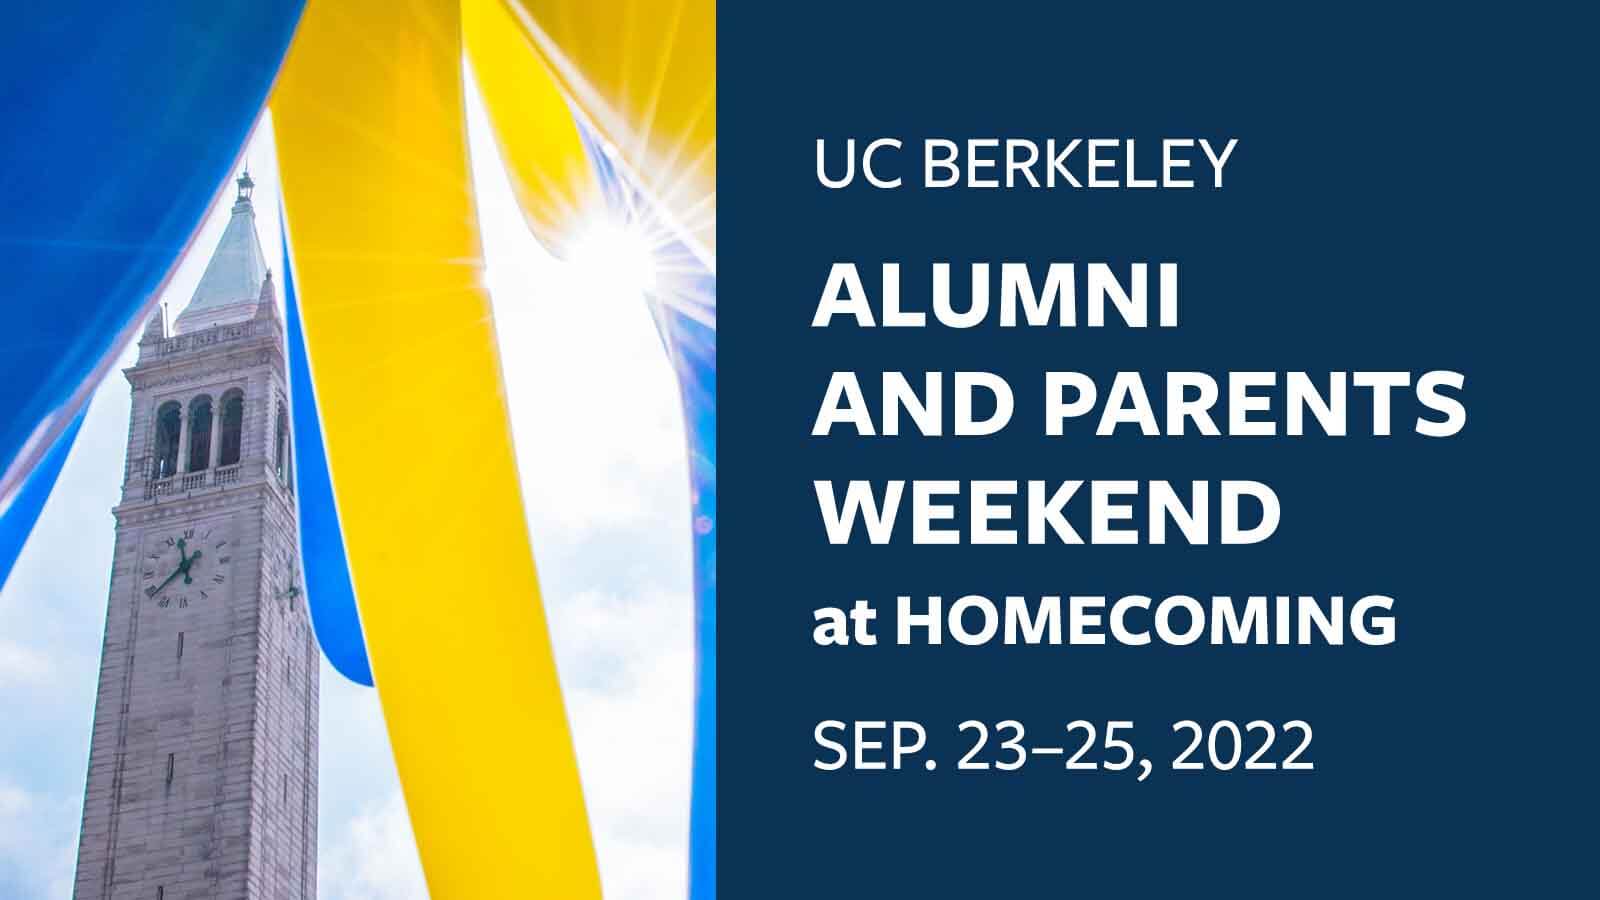 UC Berkeley 2022 Homecoming